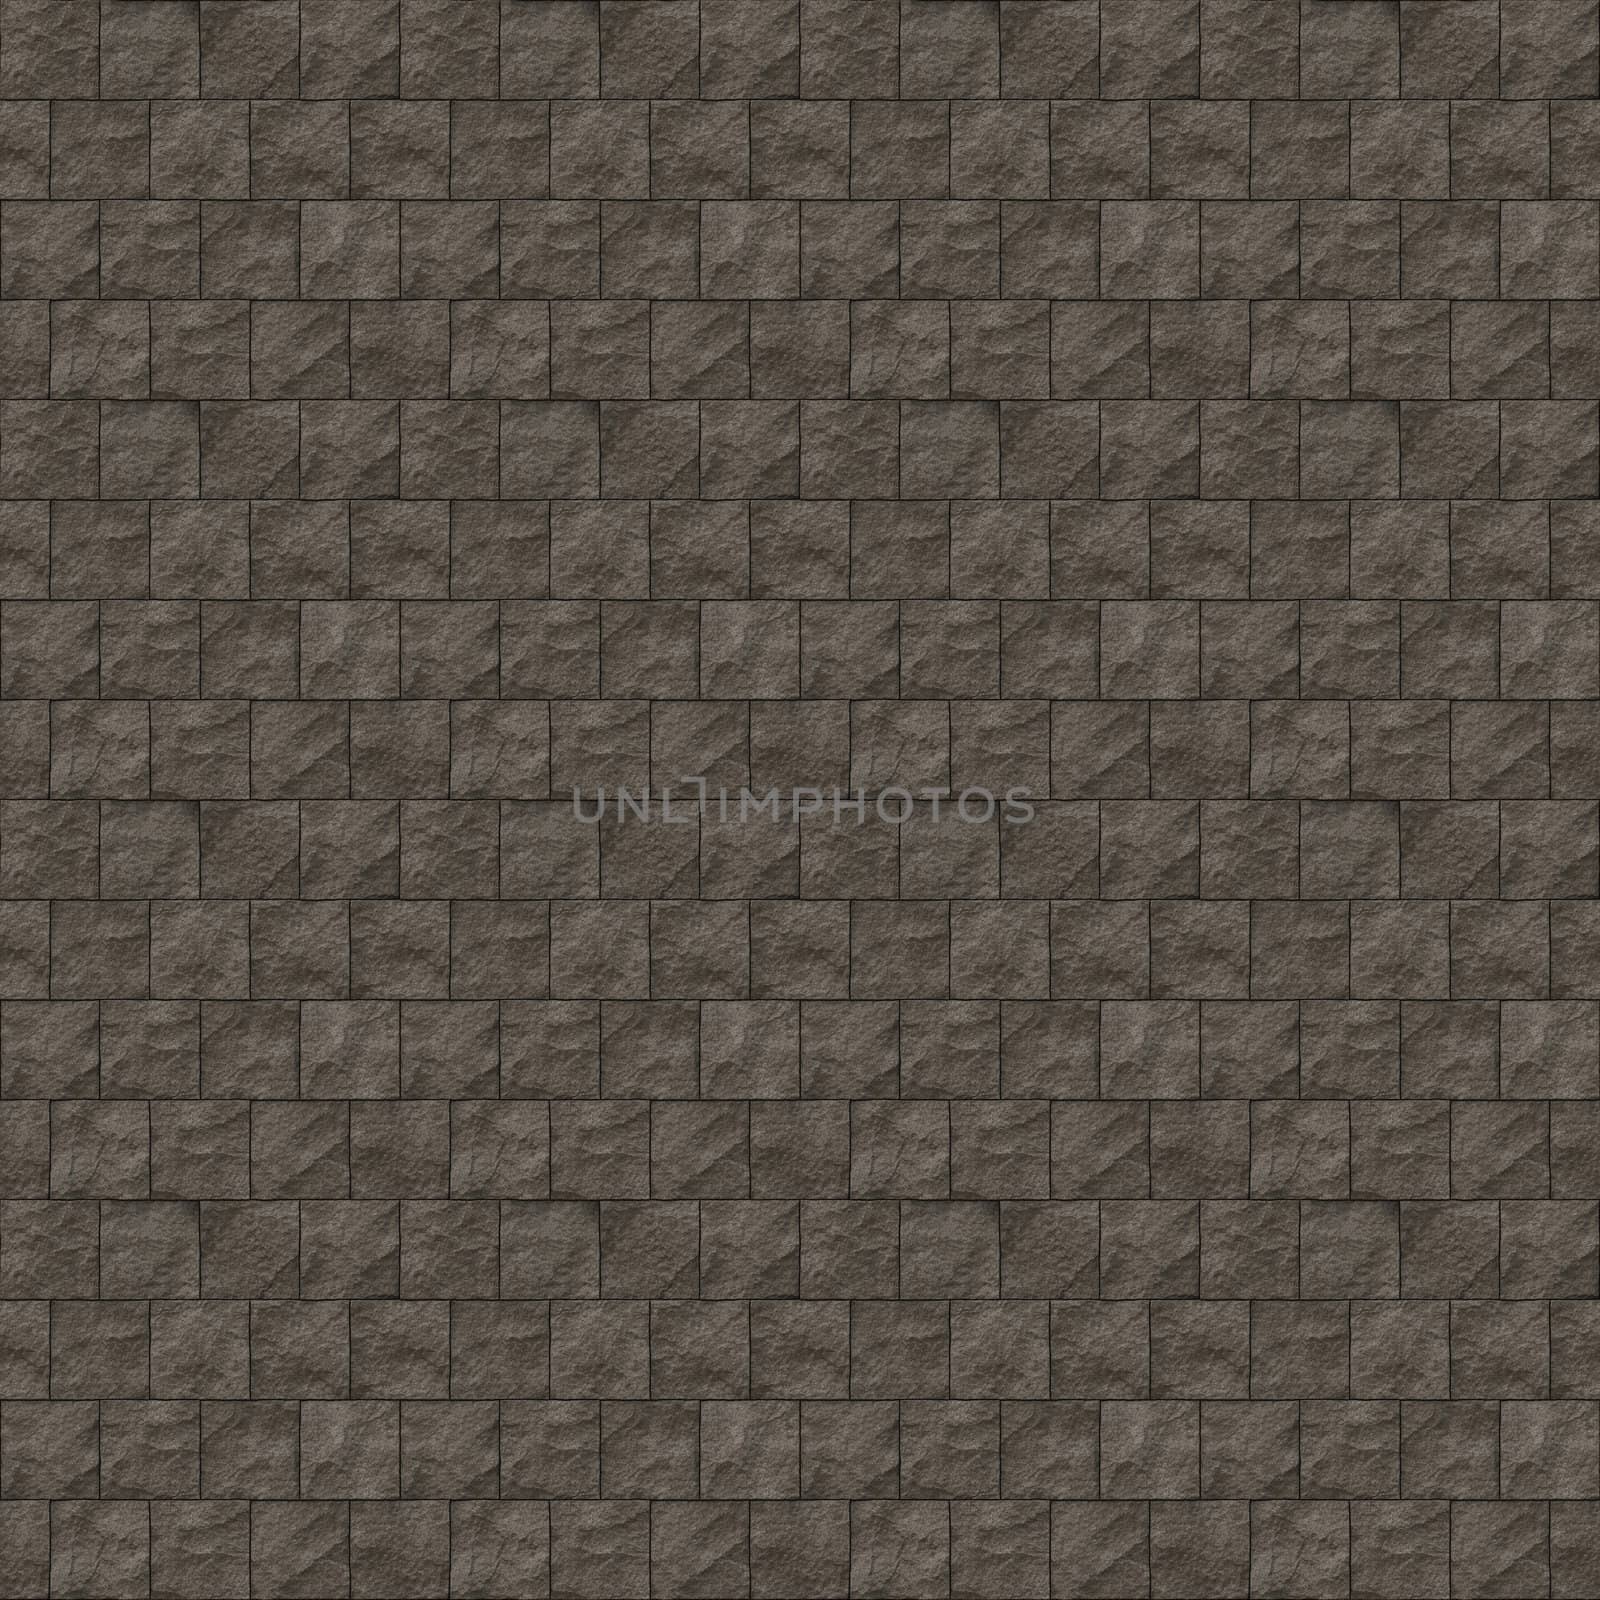 Stone Wall of Square Blocks Seamless Pattern